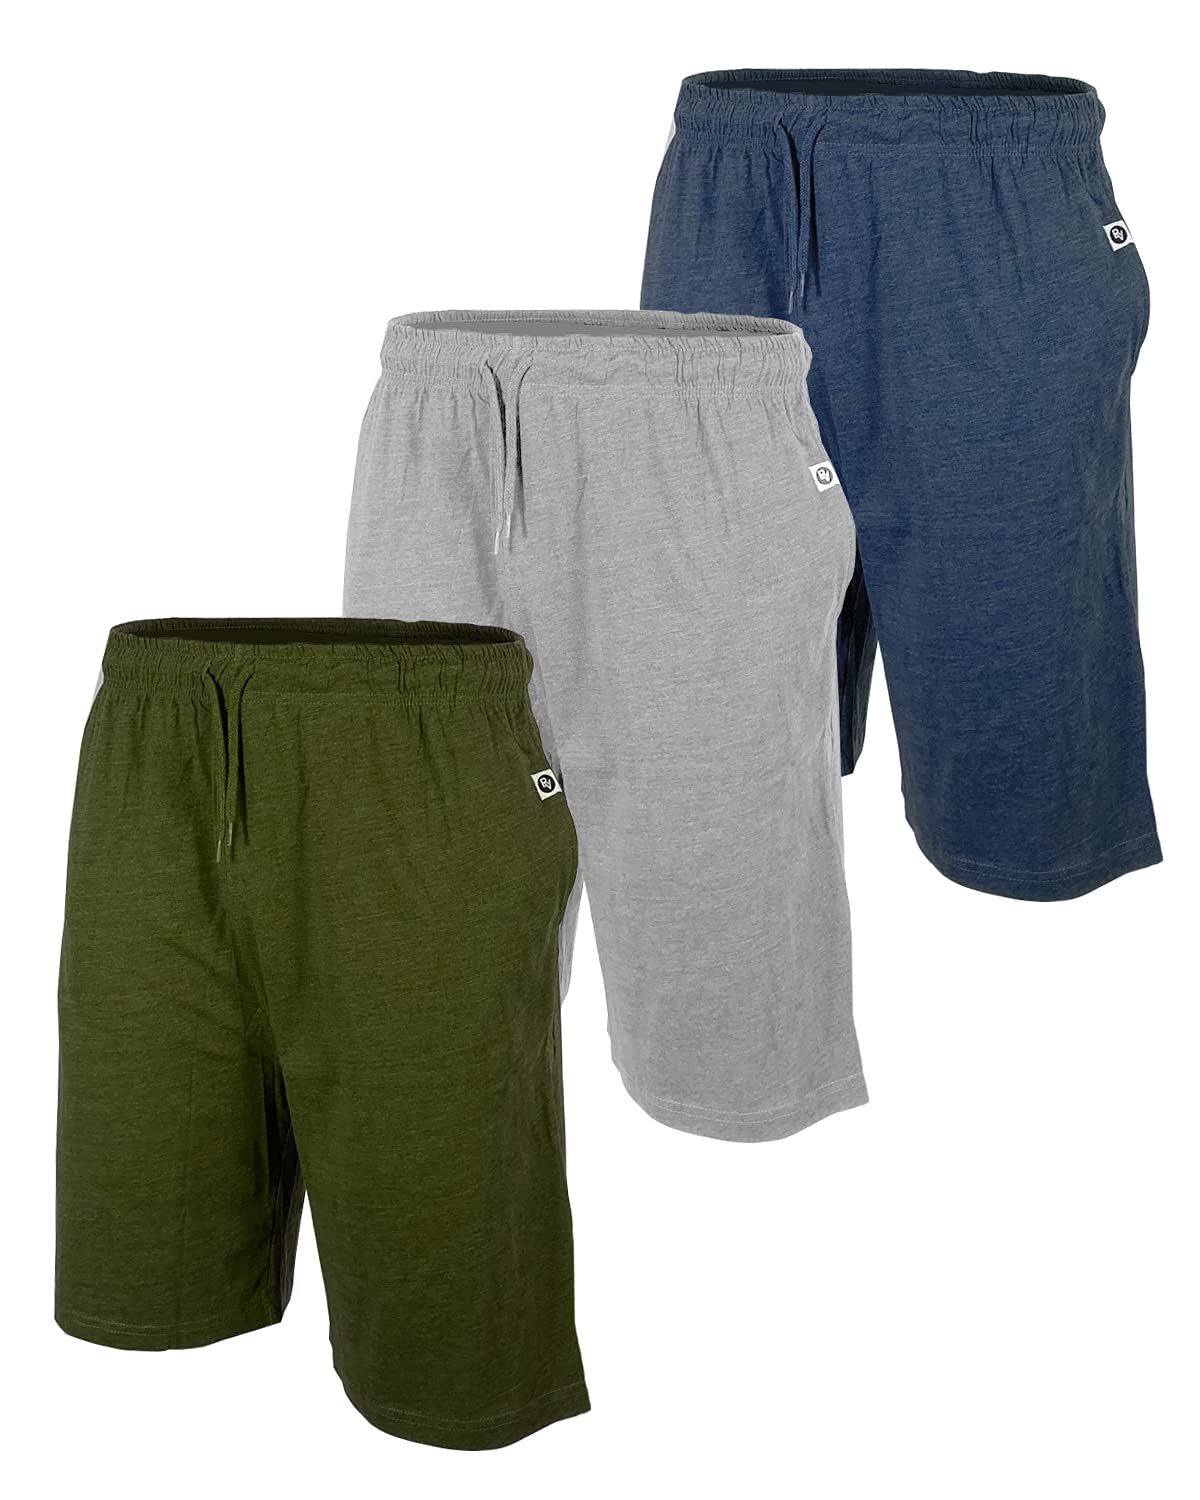 3-Pack Mens Sleep & Loungewear Shorts|Soft Comfortable Cotton|Drawstring Pull|Pockets|Many Colors|Small-3XL